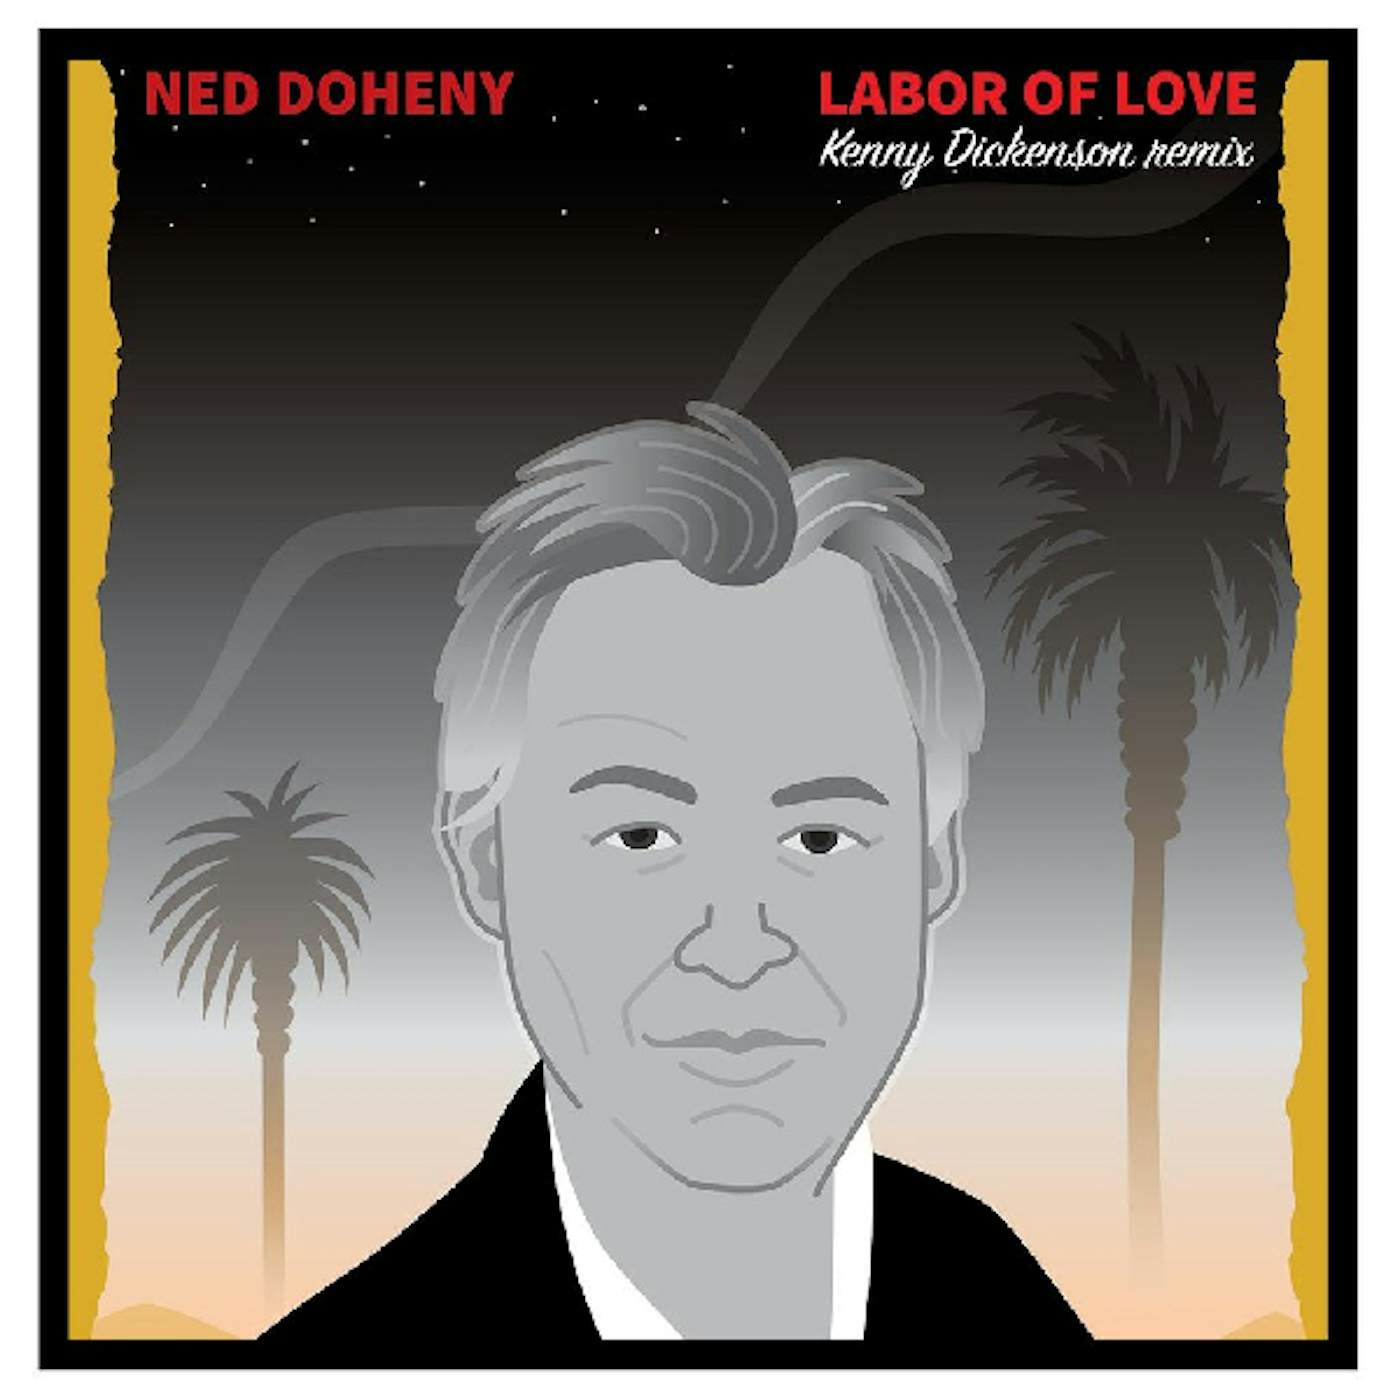 Ned Doheny LABOR OF LOVE Vinyl Record